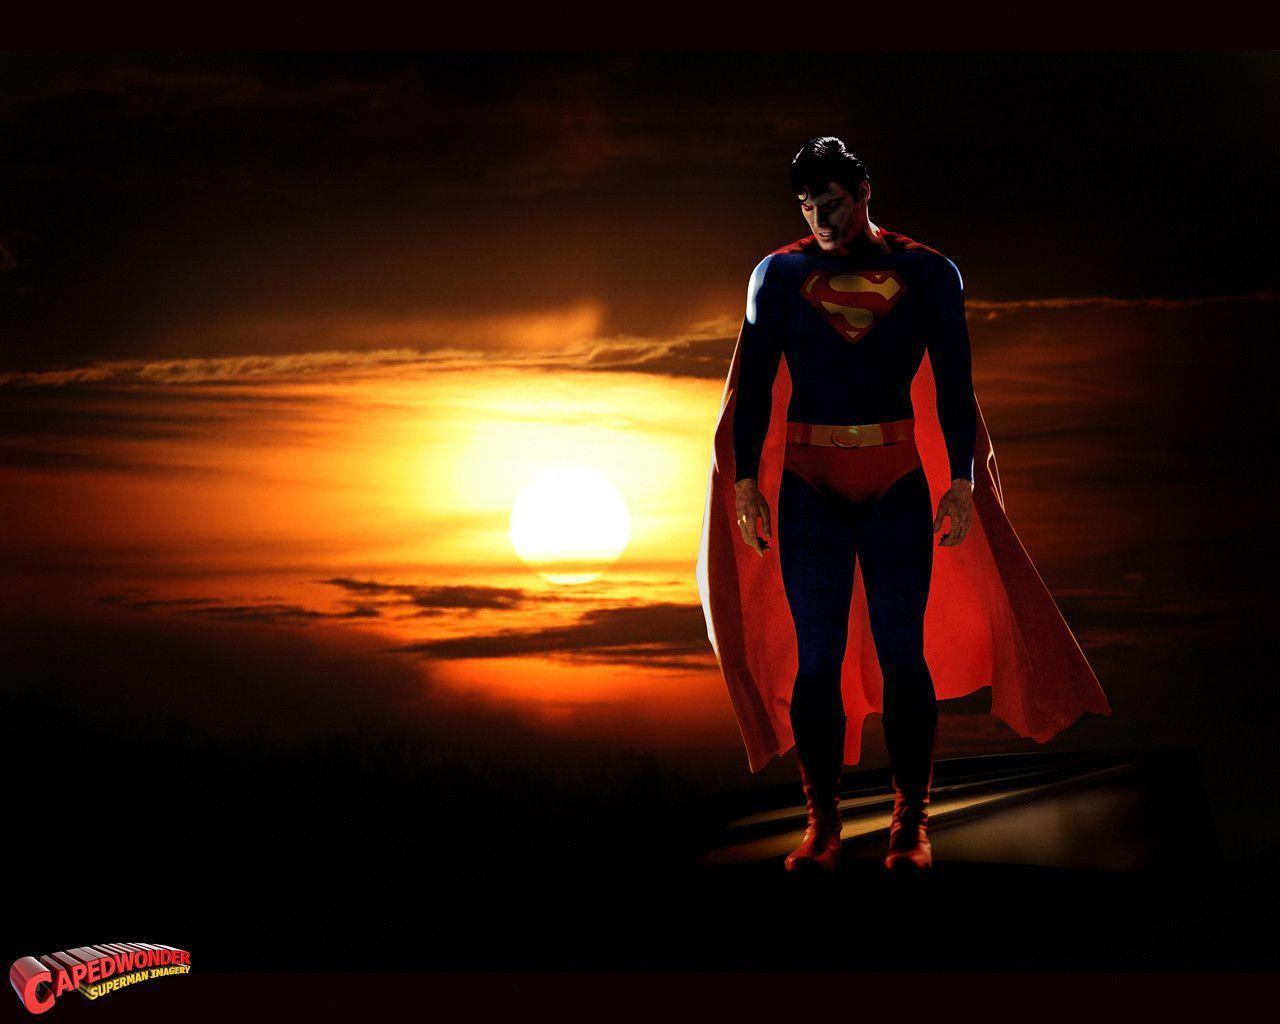 Hd Ps3 Wallpaper Superman. Free PSP Themes Wallpaper